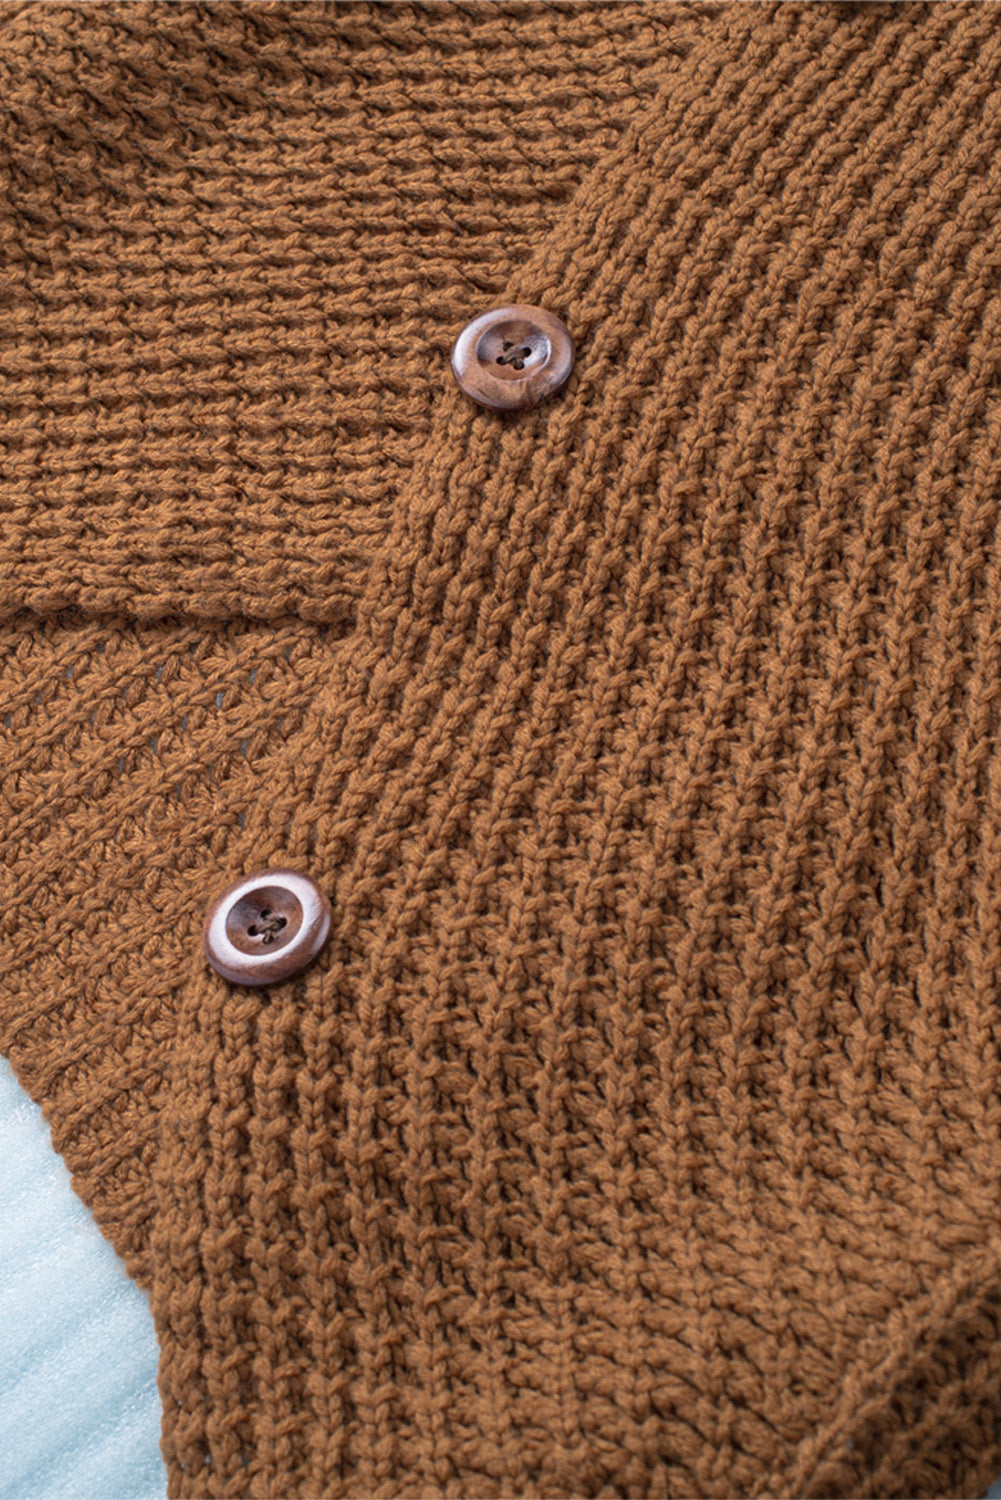 Khaki Buttoned Wrap Turtleneck Sweater